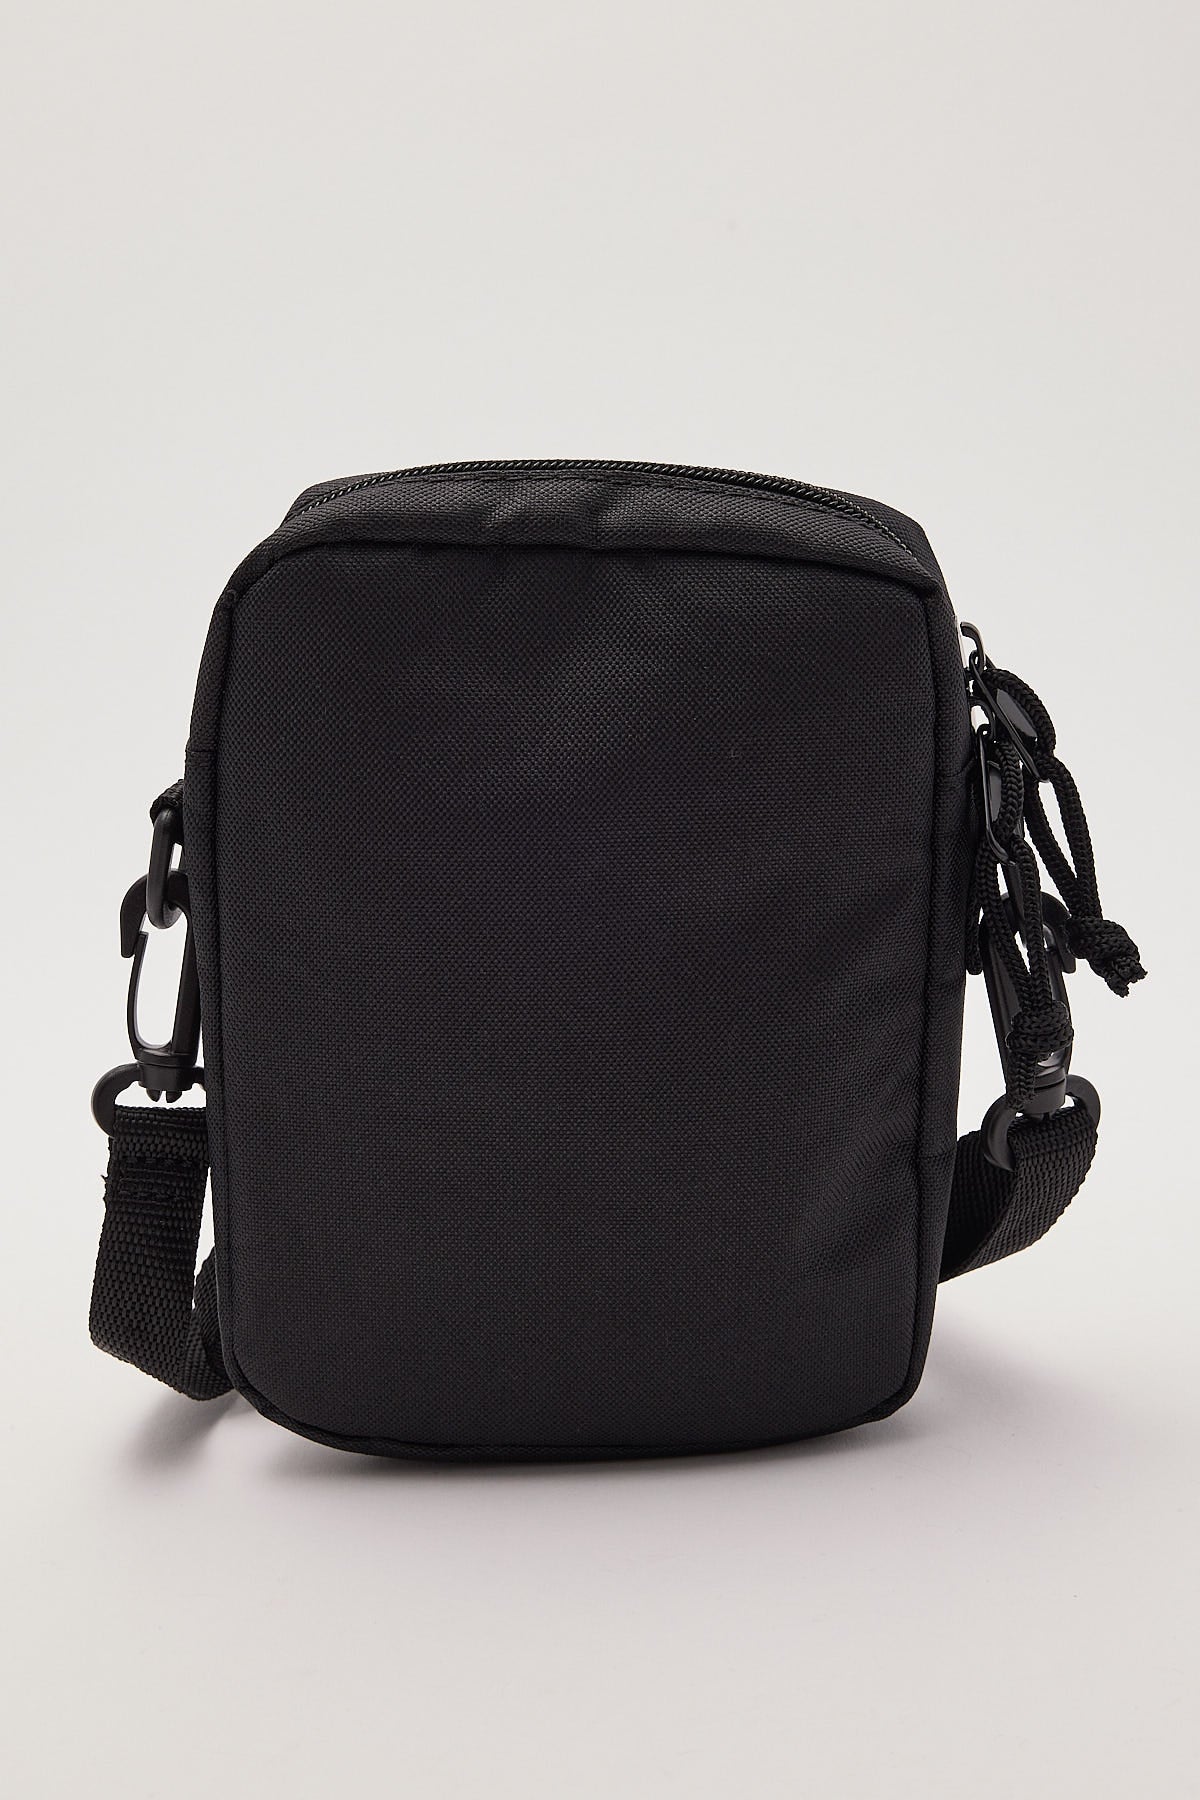 Neovision Strappy Crossover Bag Black – Universal Store